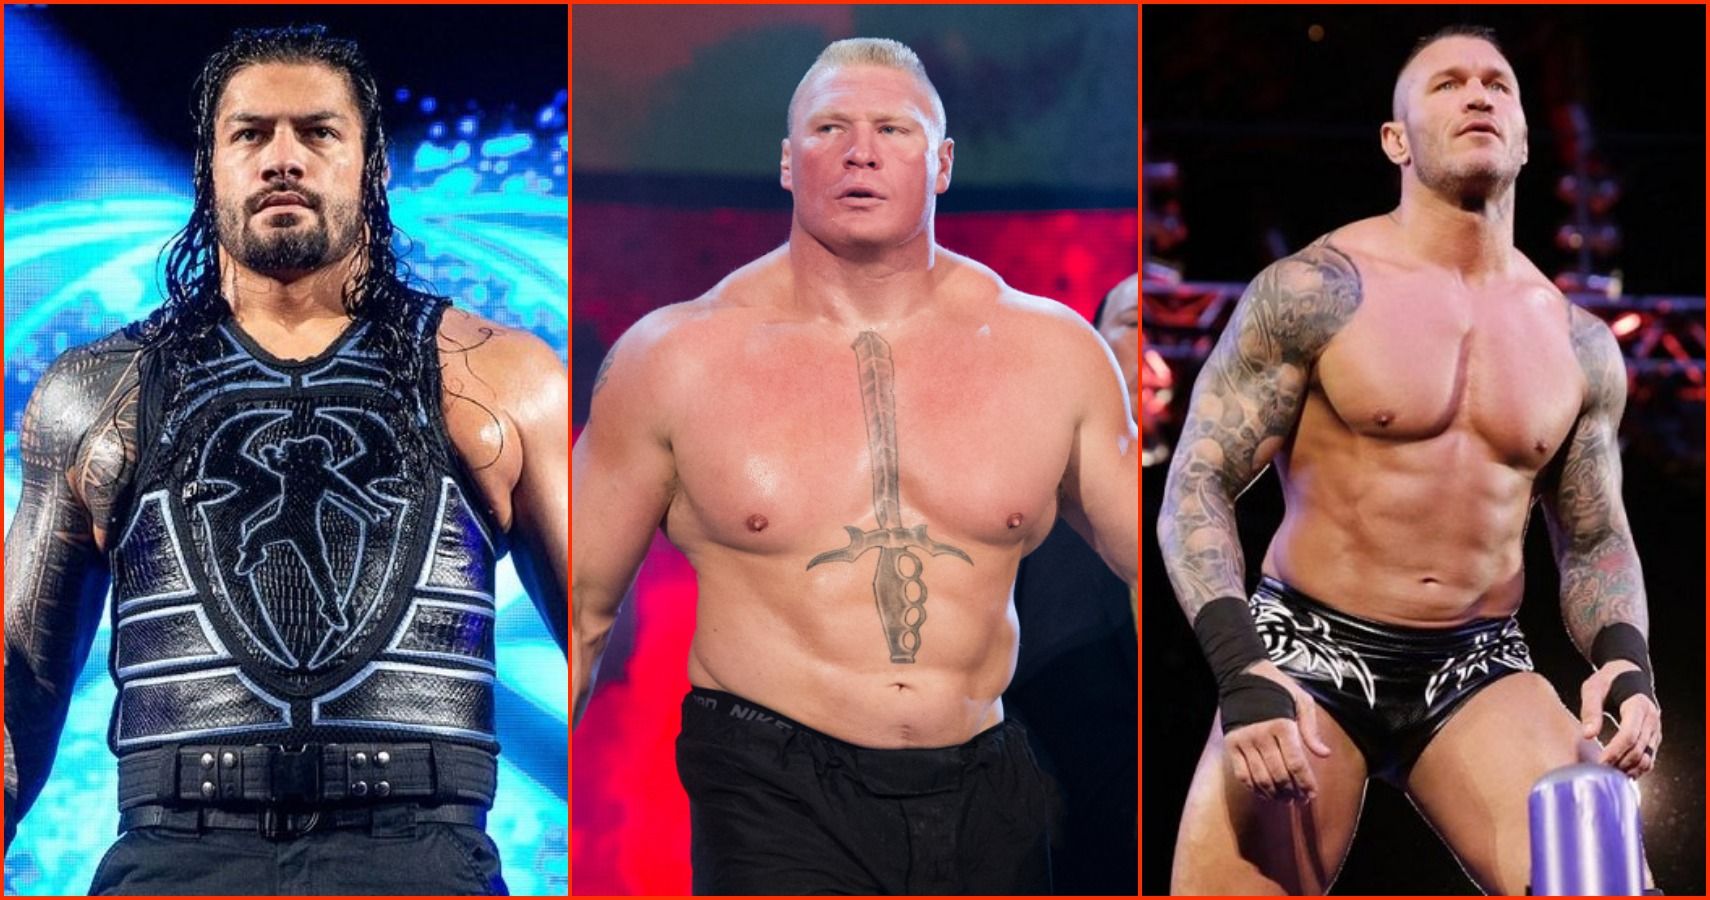 Roman Reigns, Brock Lesnar and Randy Orton